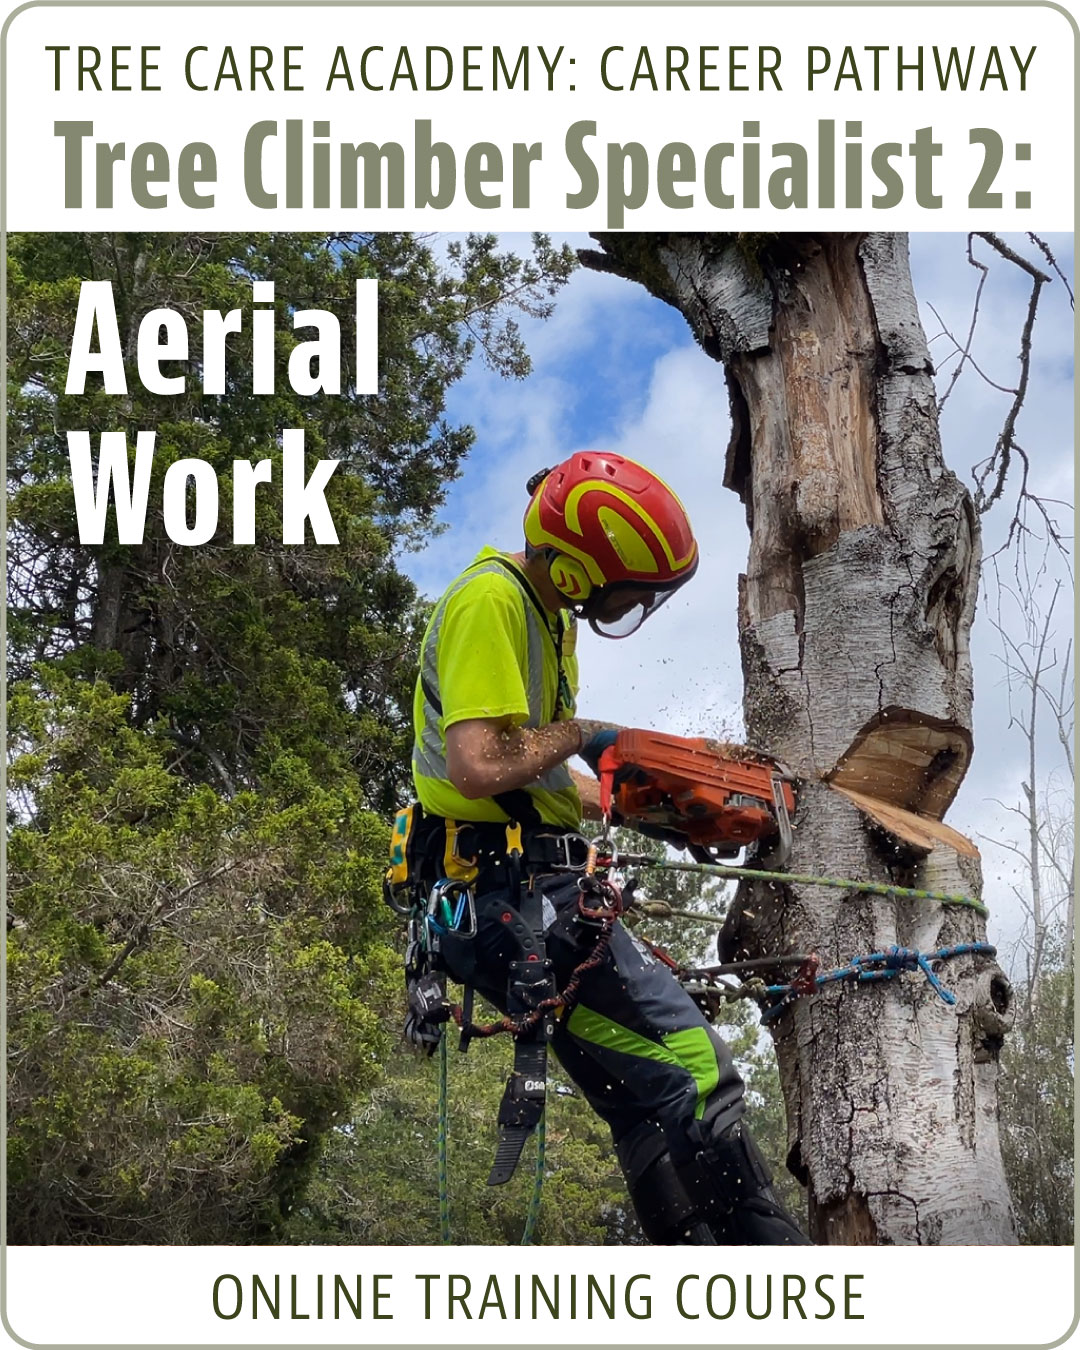 Tree Climber Specialist 2: Aerial Work Specialist